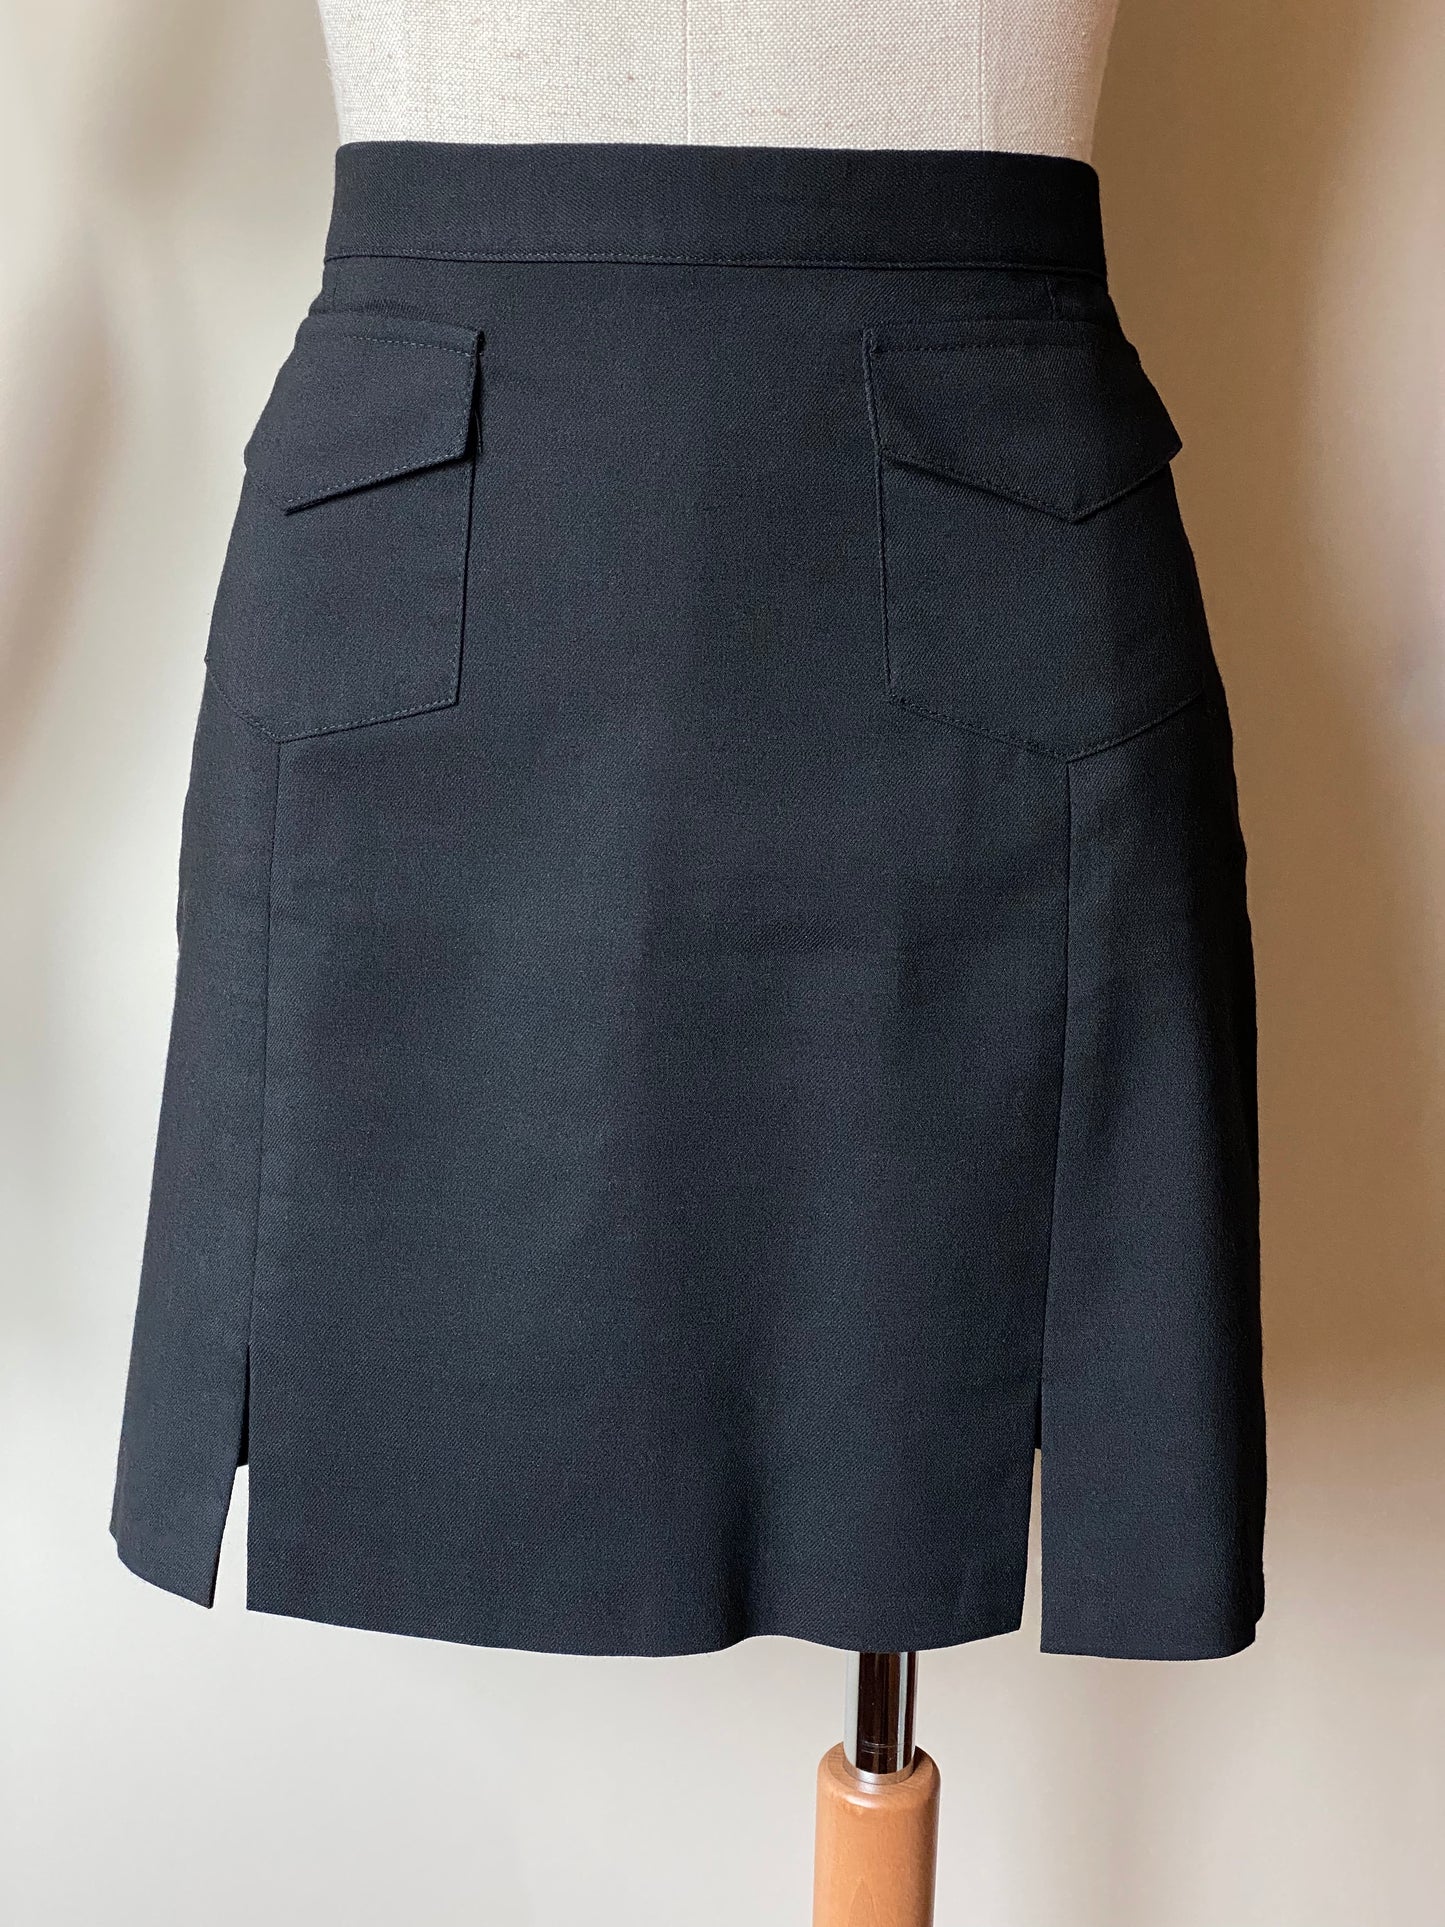 Vintage Black Woolen Mini Skirt